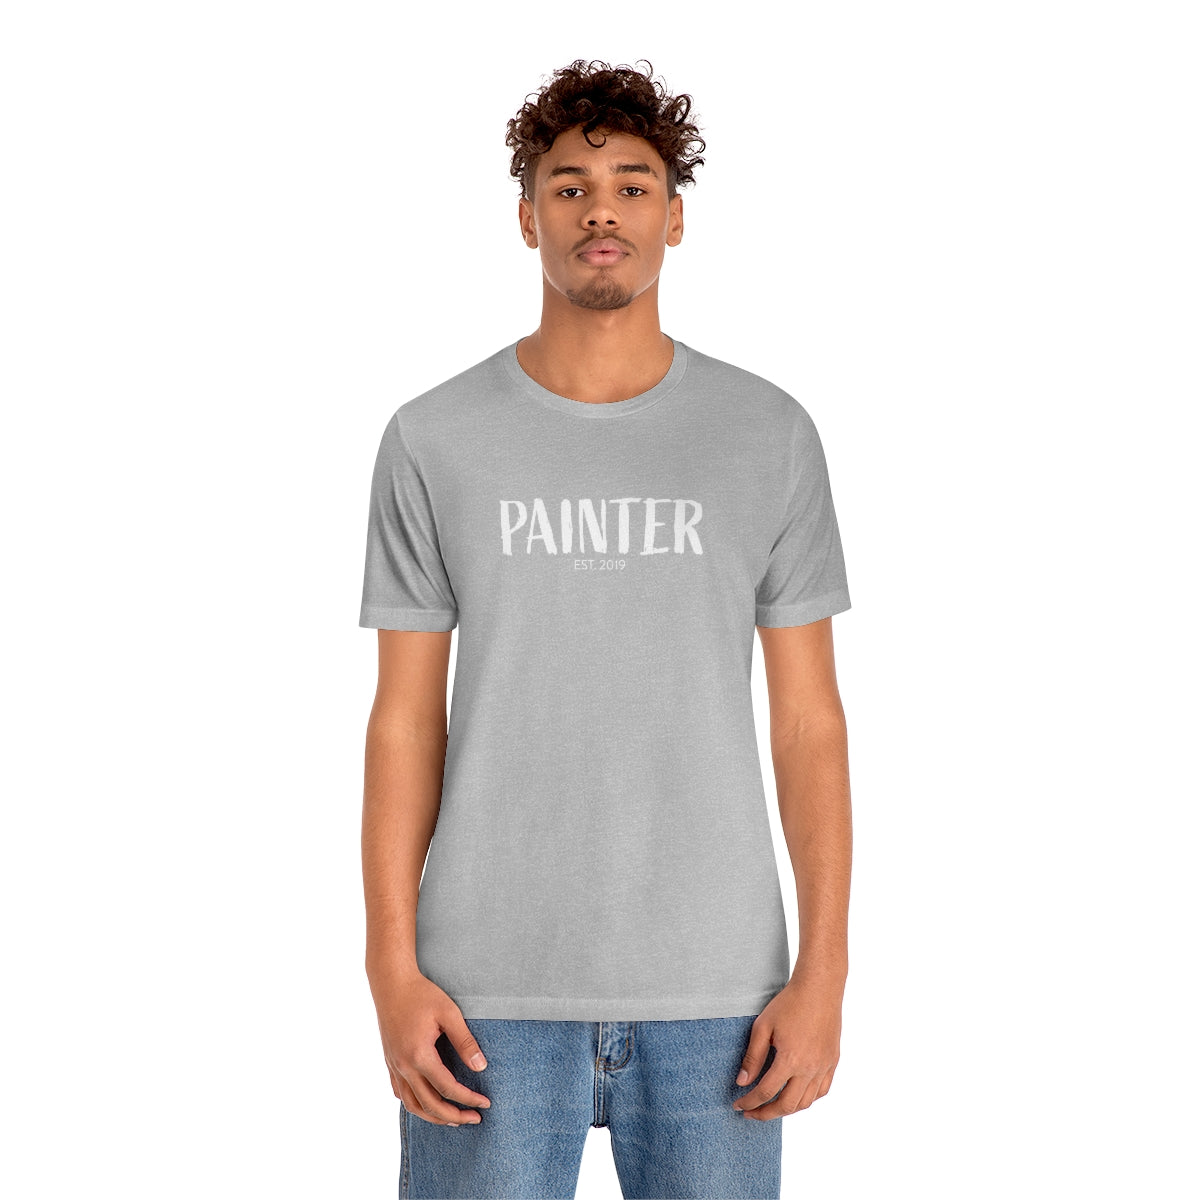 Painter Est. 2019 Short Sleeve Tee